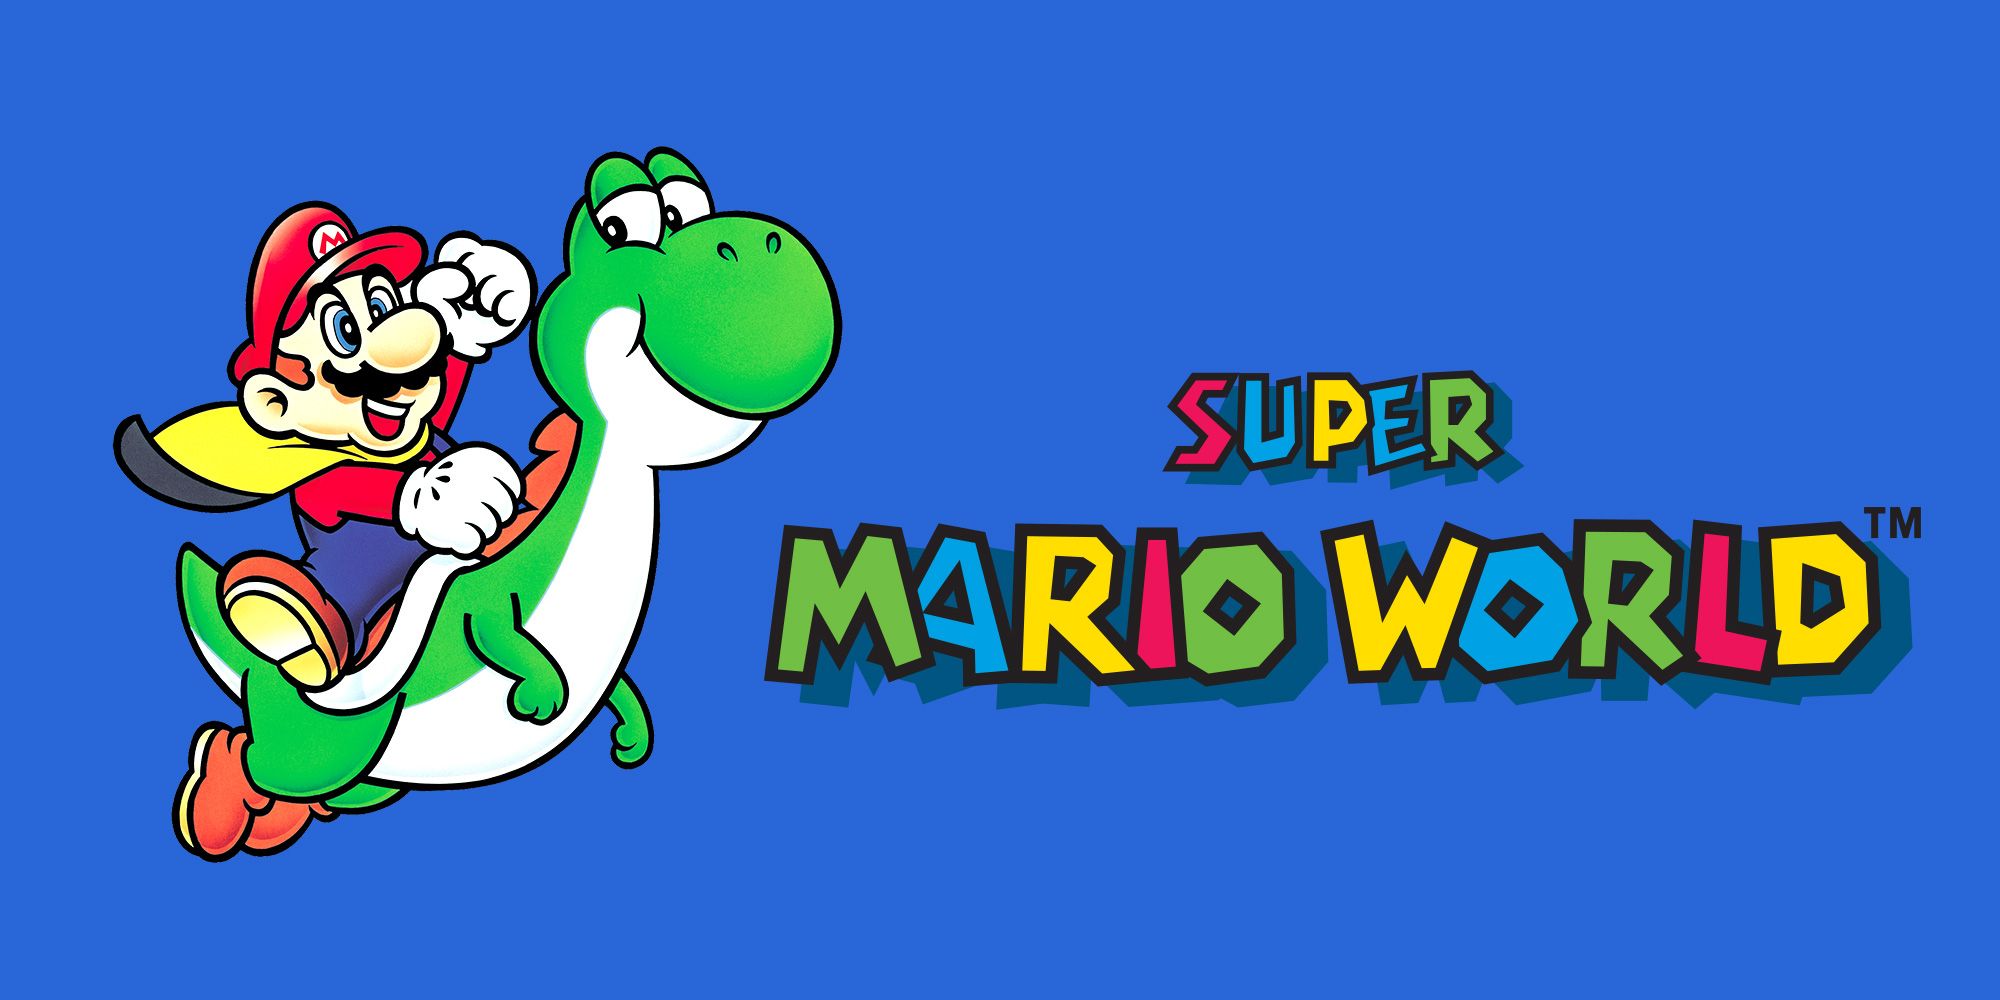 Super Mario World promtional image